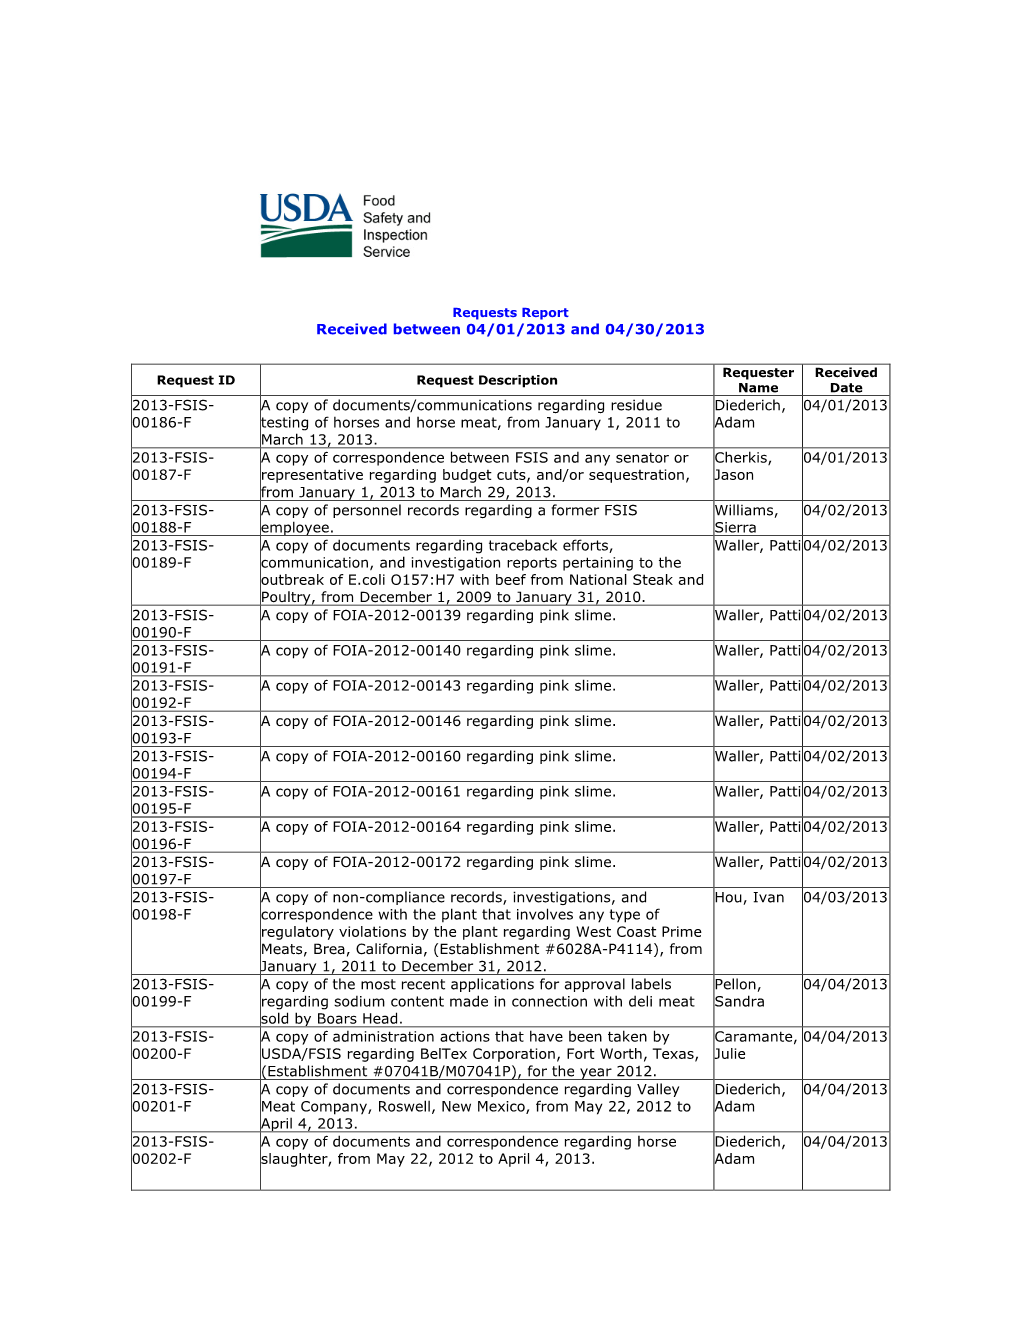 (FOIA) Requests Report for April 2013